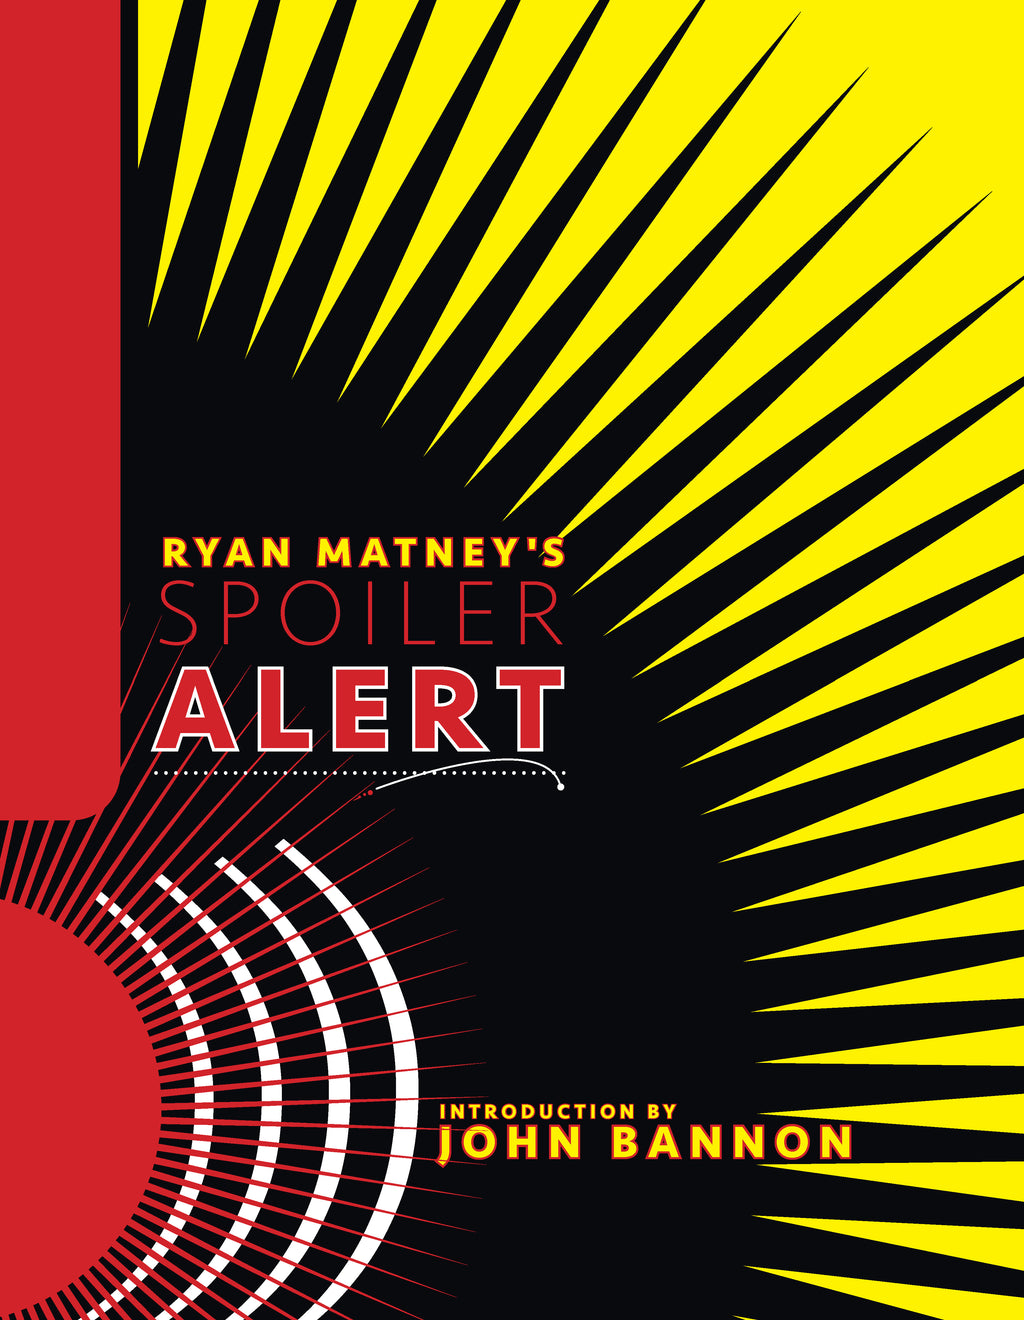 Ryan Matney - Spoiler Alert (Introduction by John Bannon)